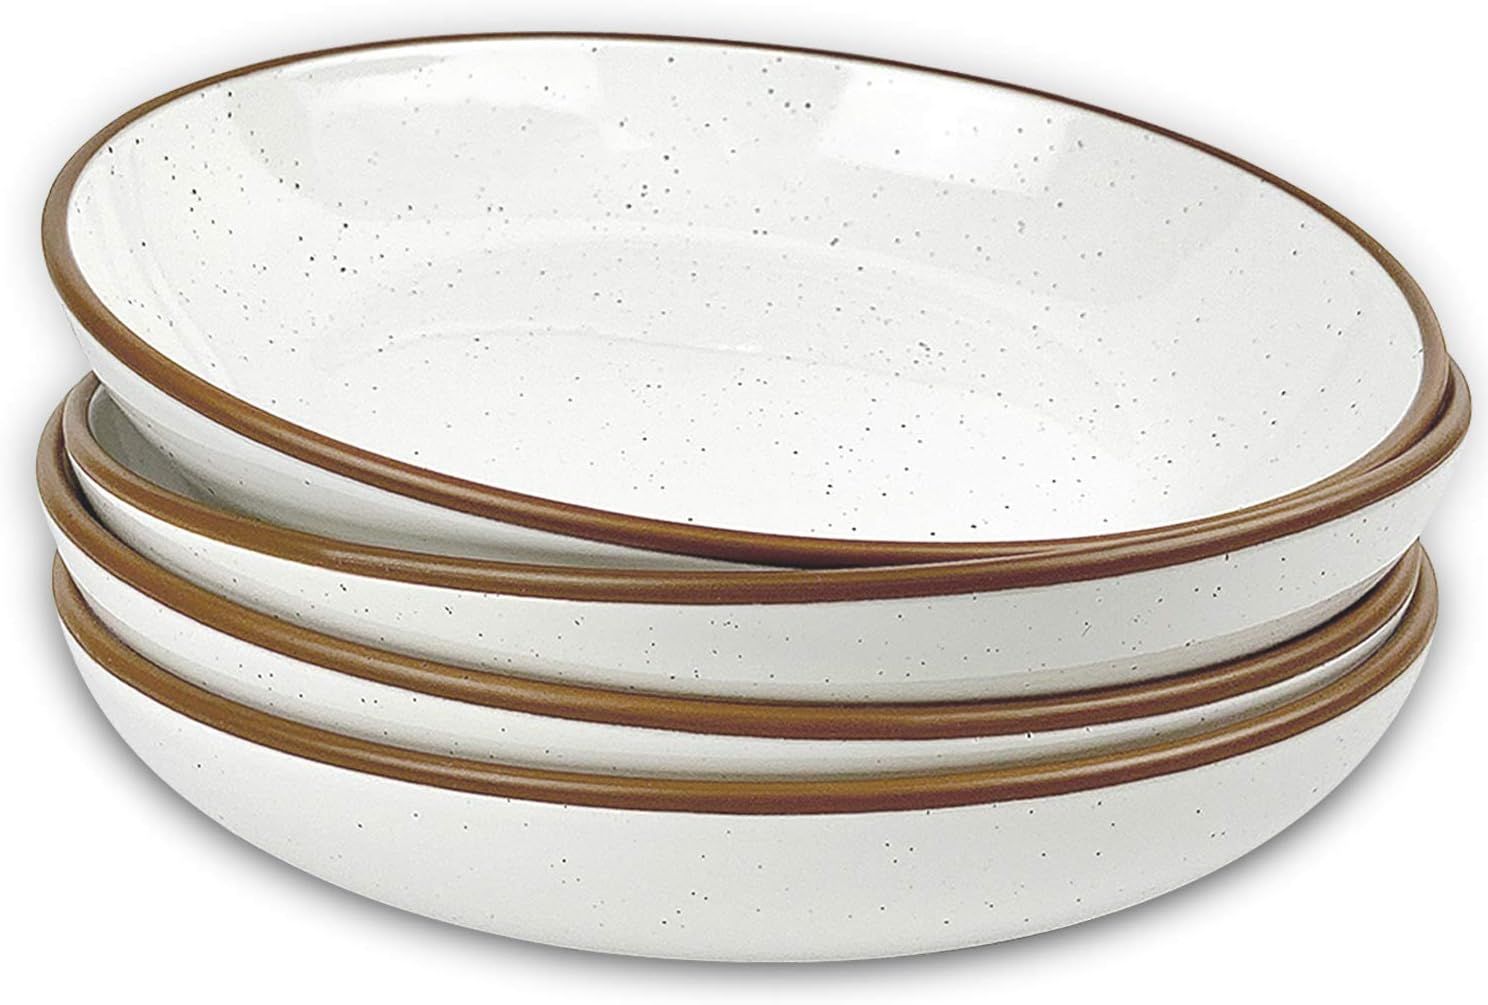 Mora Ceramic Large Pasta Bowls 30oz, Set of 4 - Serving, Salad, Dinner, etc Plate/Wide Bowl - Mic... | Amazon (US)